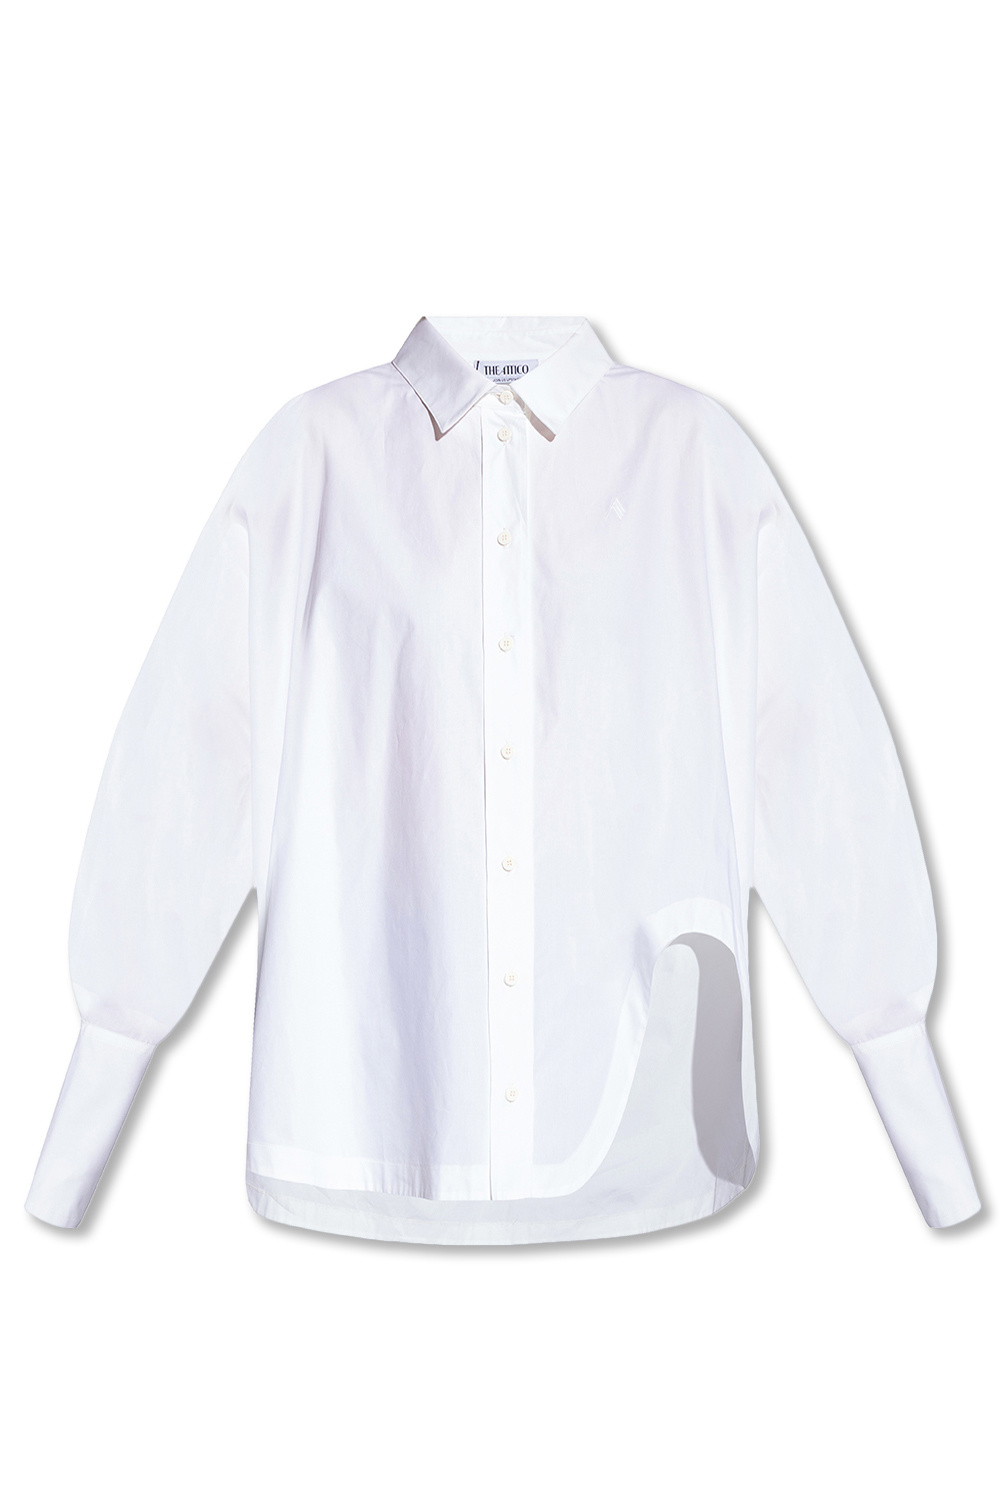 The Attico ‘Diana’ oversize shirt